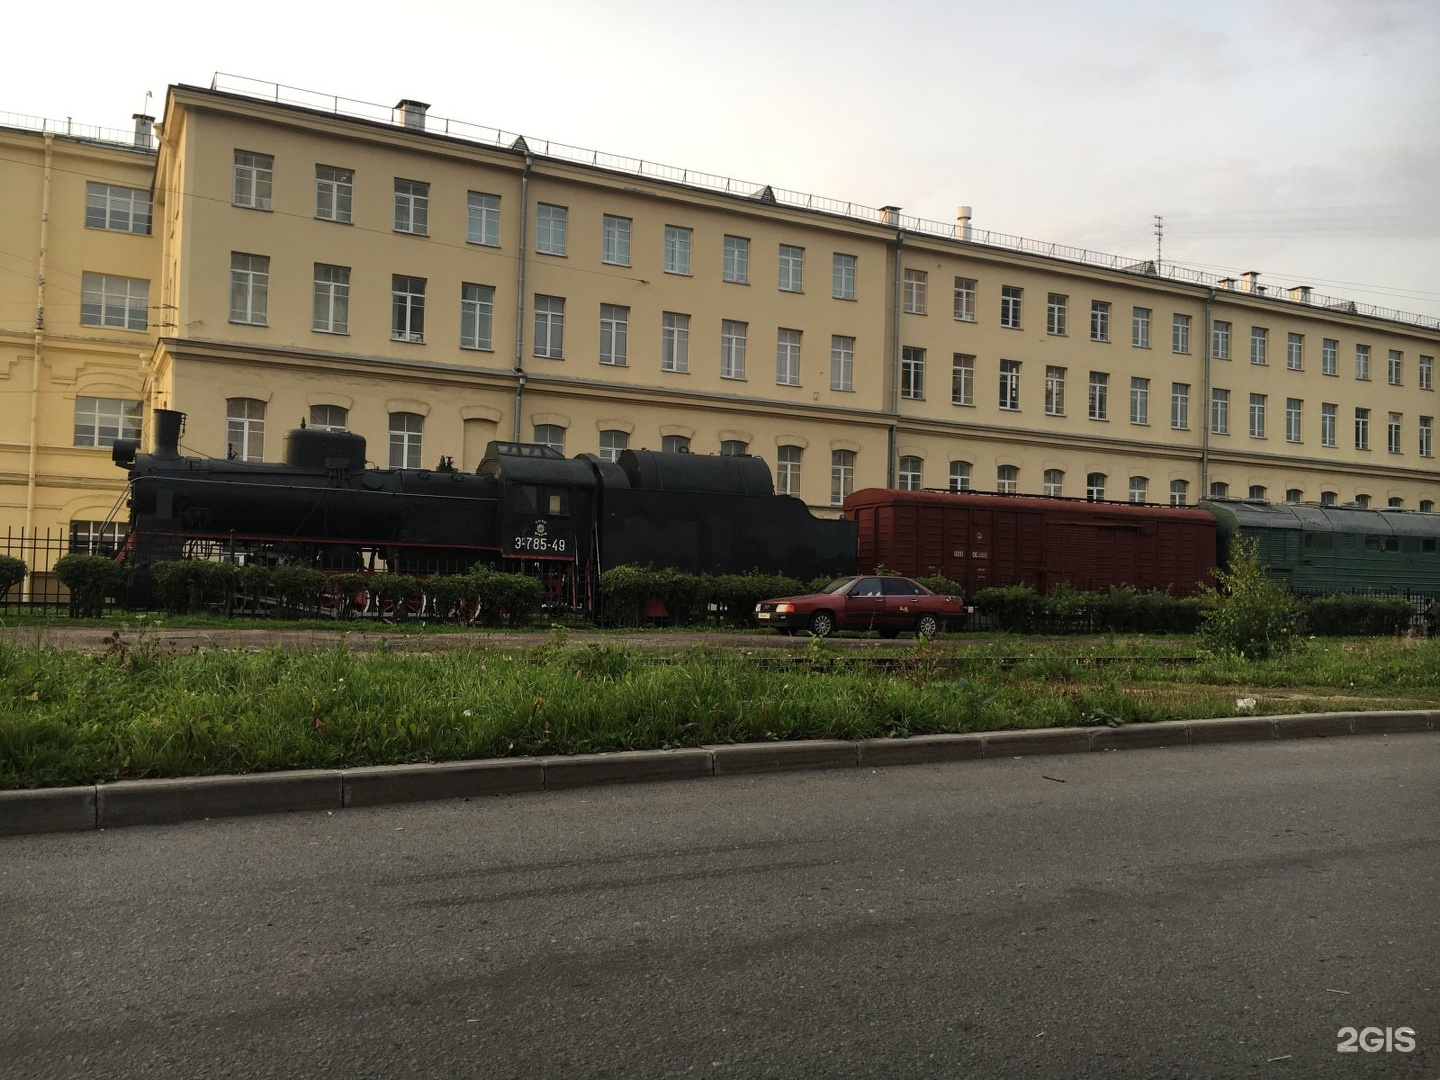 Сайт железнодорожного колледжа спб. Техникум железнодорожного транспорта СПБ Седова. СПТЖТ Седова 56. Седова 56 техникум железнодорожного транспорта. Седова 56 Санкт-Петербург техникум.